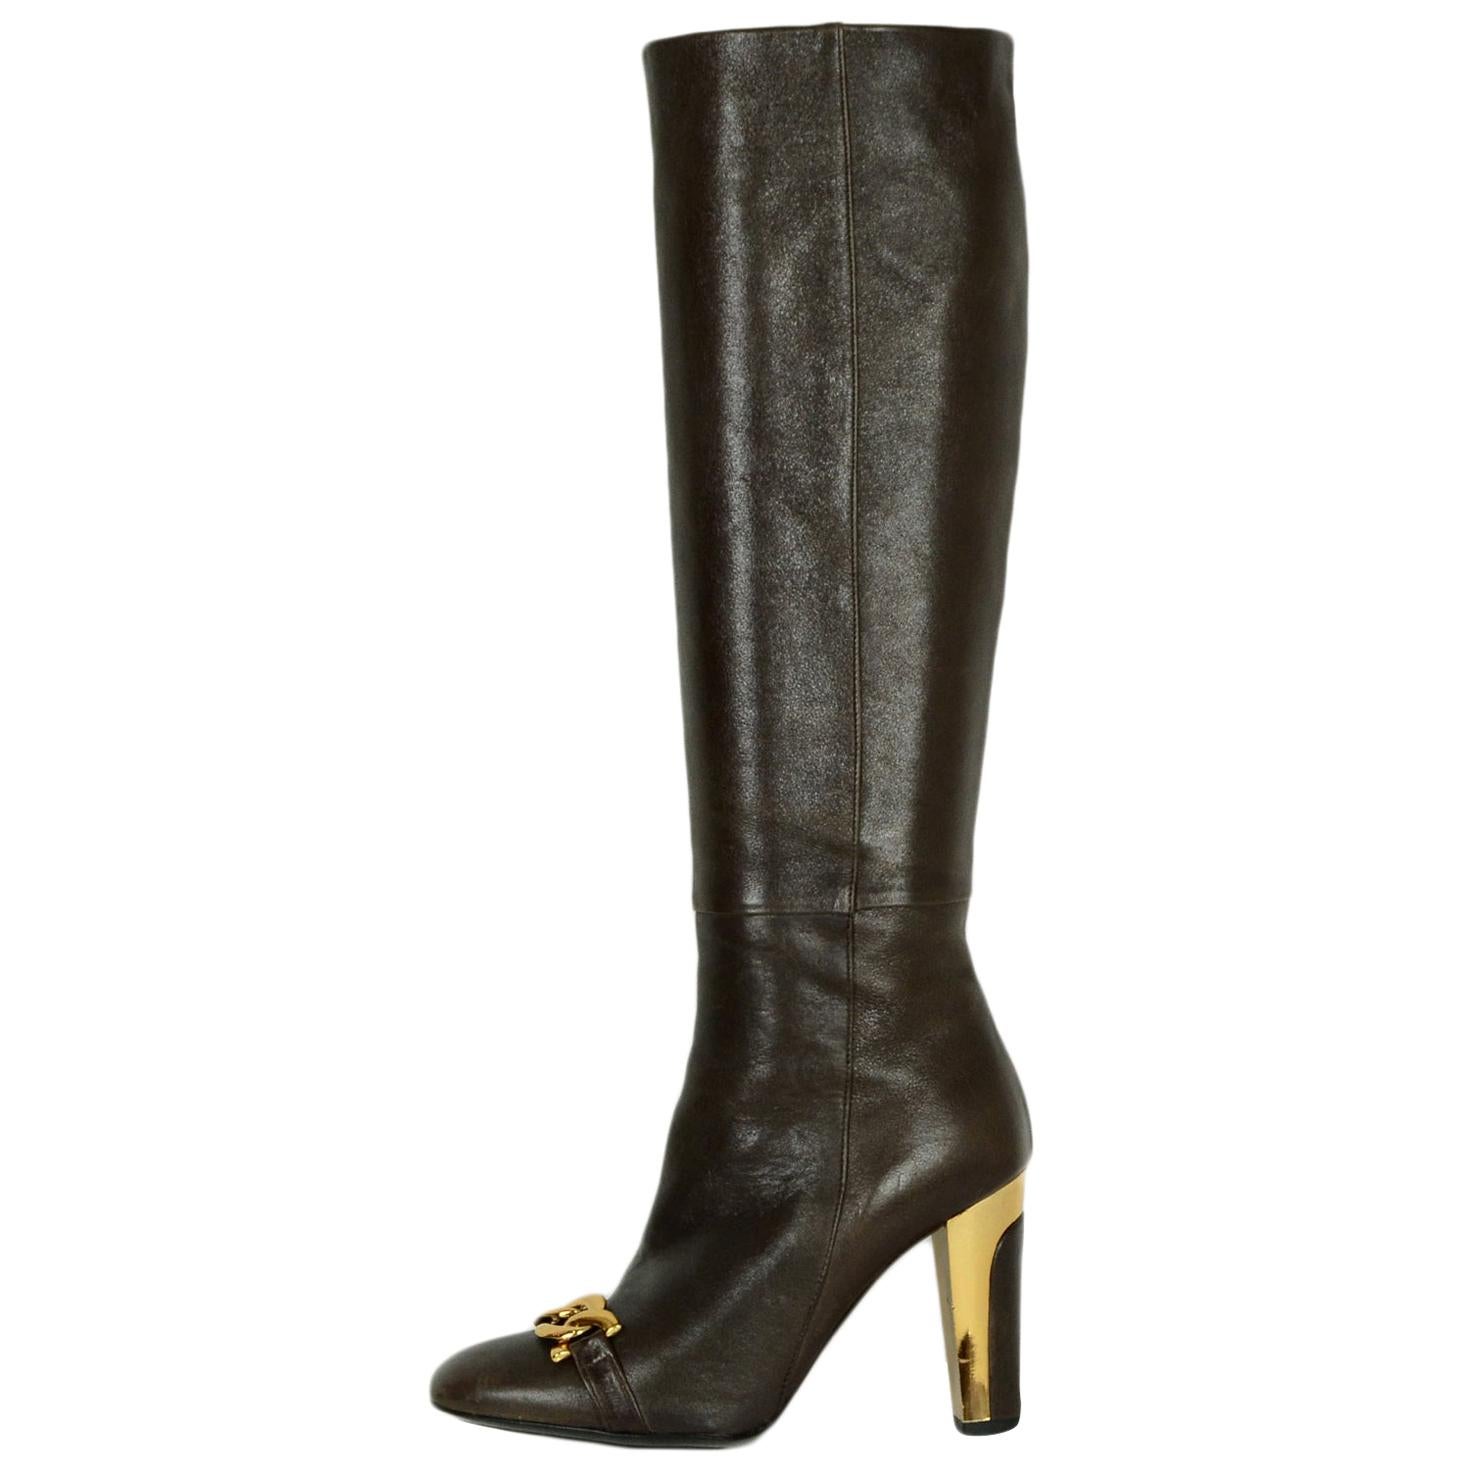 Barbara Bui Brown Leather Knee High Boots w/ Gold Chain & Heels sz 37